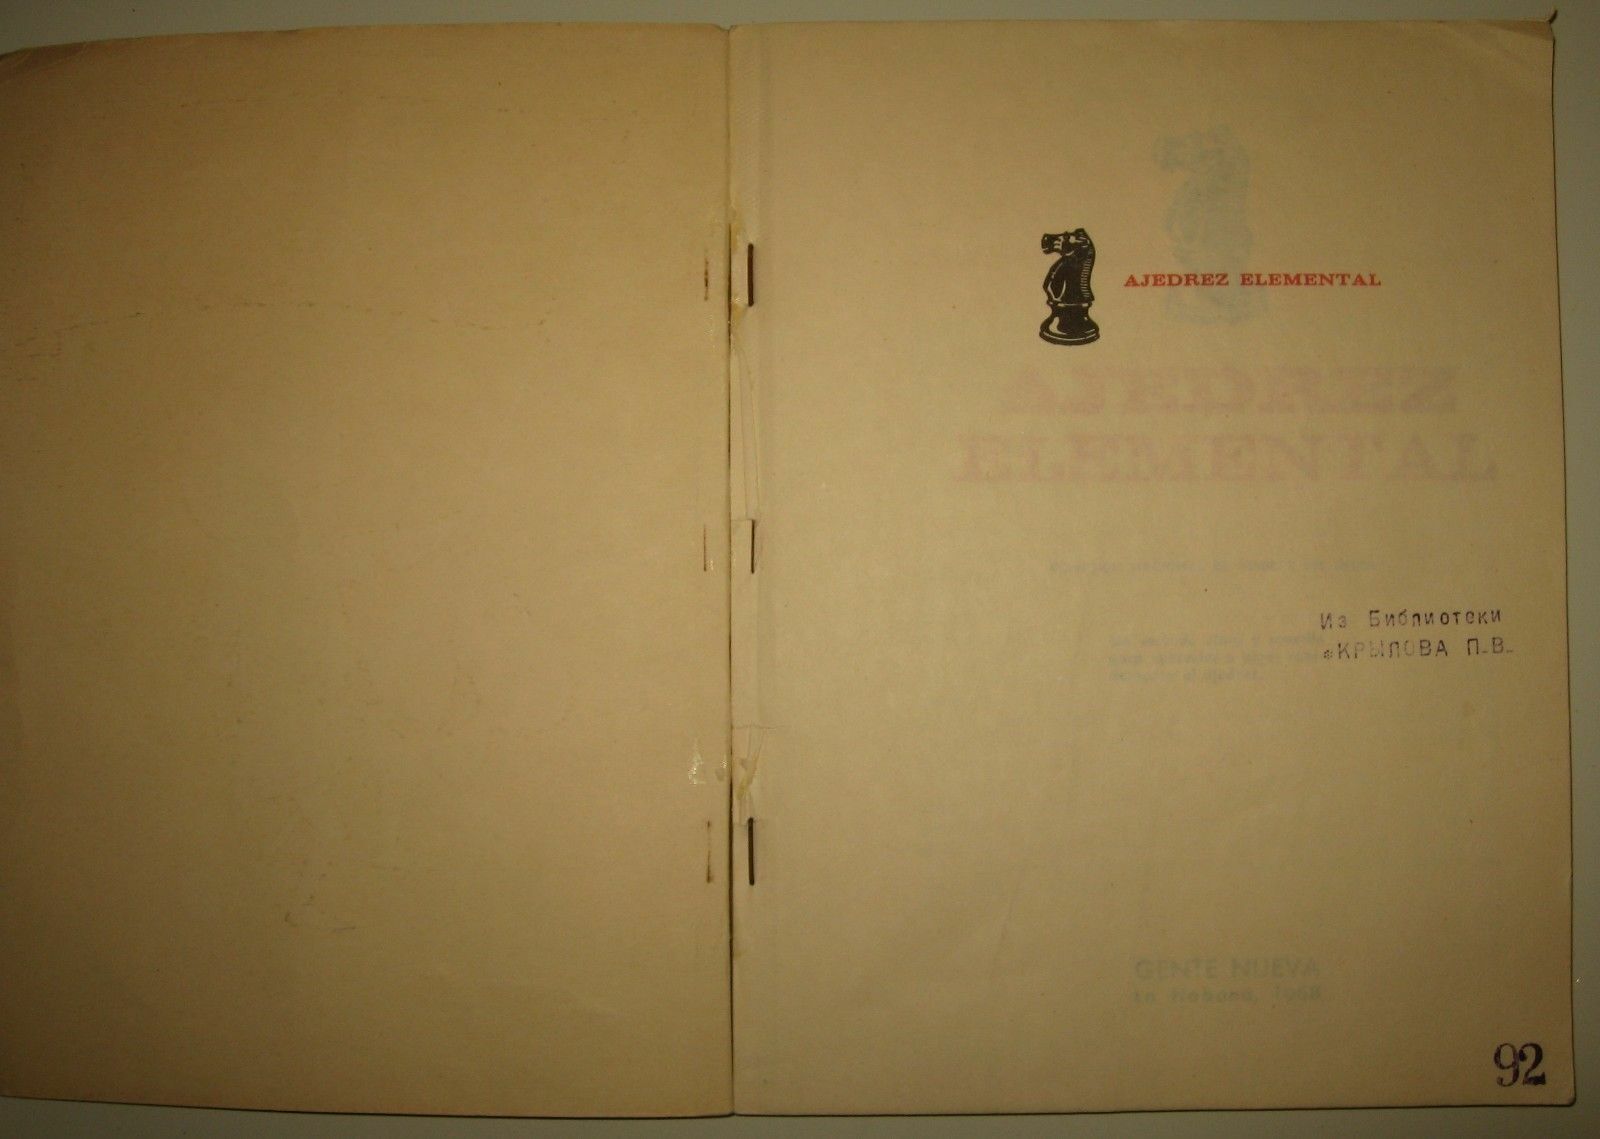 11879.Spanish Chess Book: Ajedrez elemental. Habana, 1968